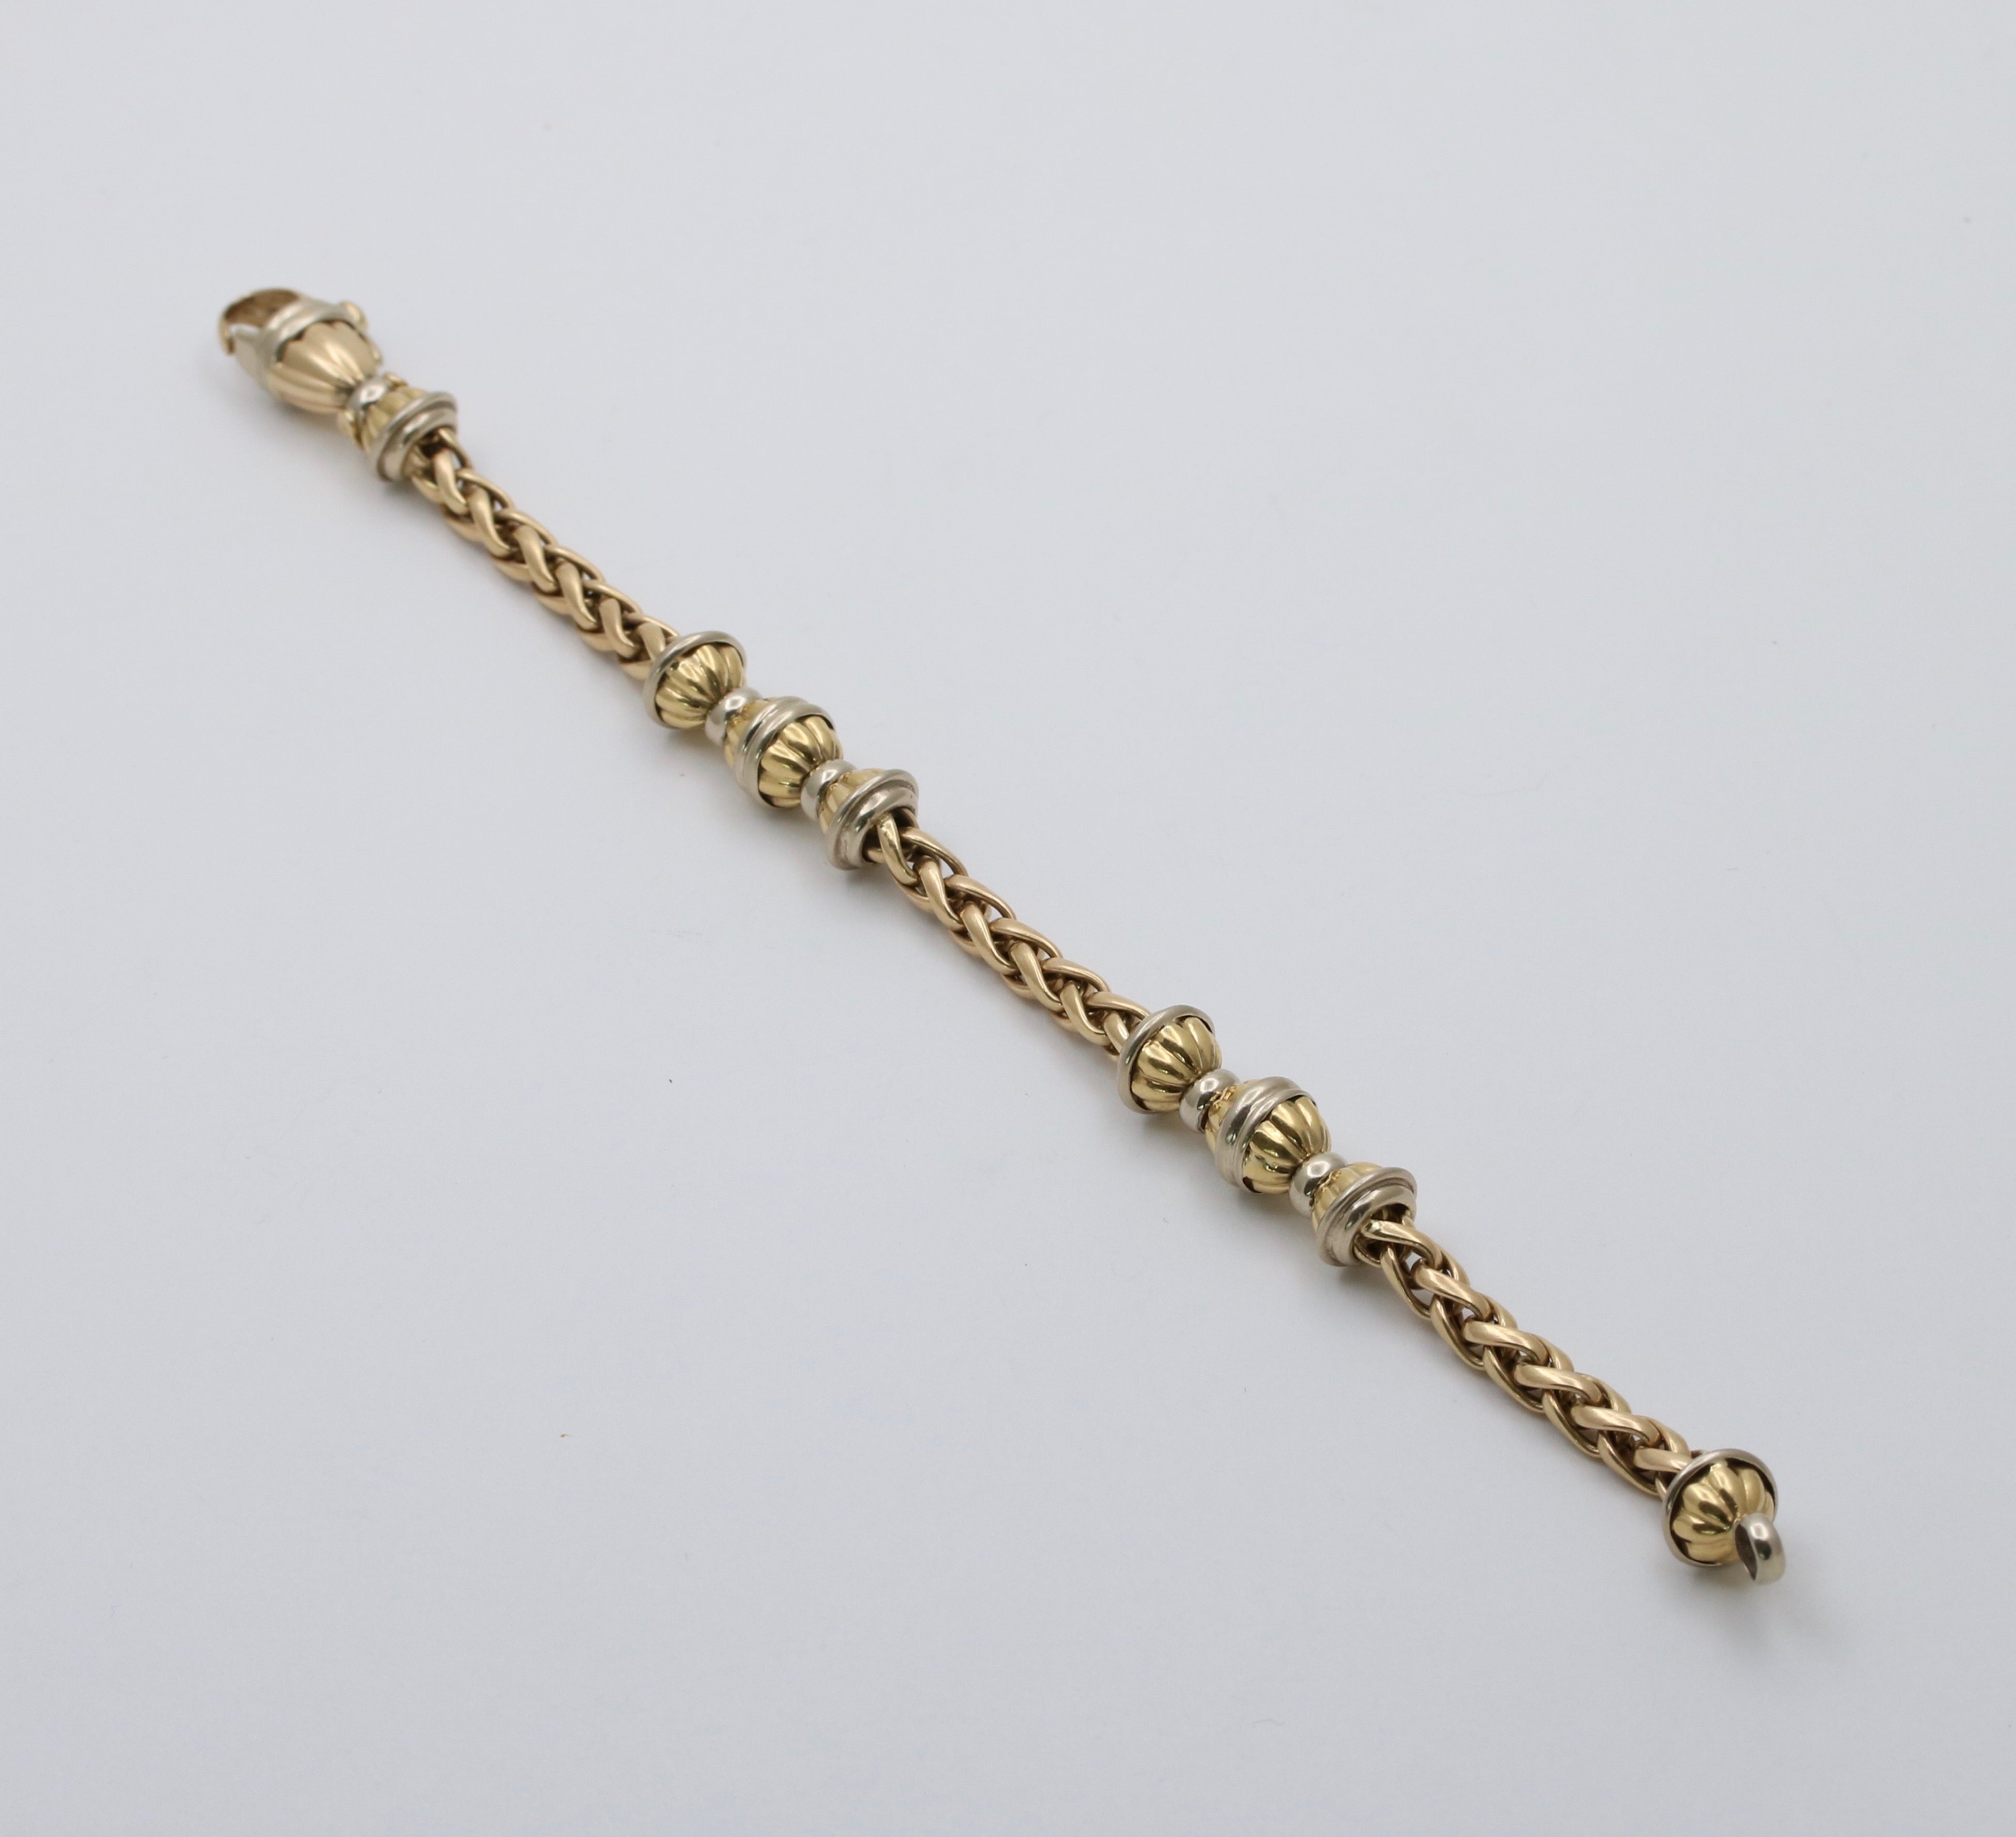 Vintage Italian 14K Gold Woven Link Bracelet, 7.5” Long – Alpha